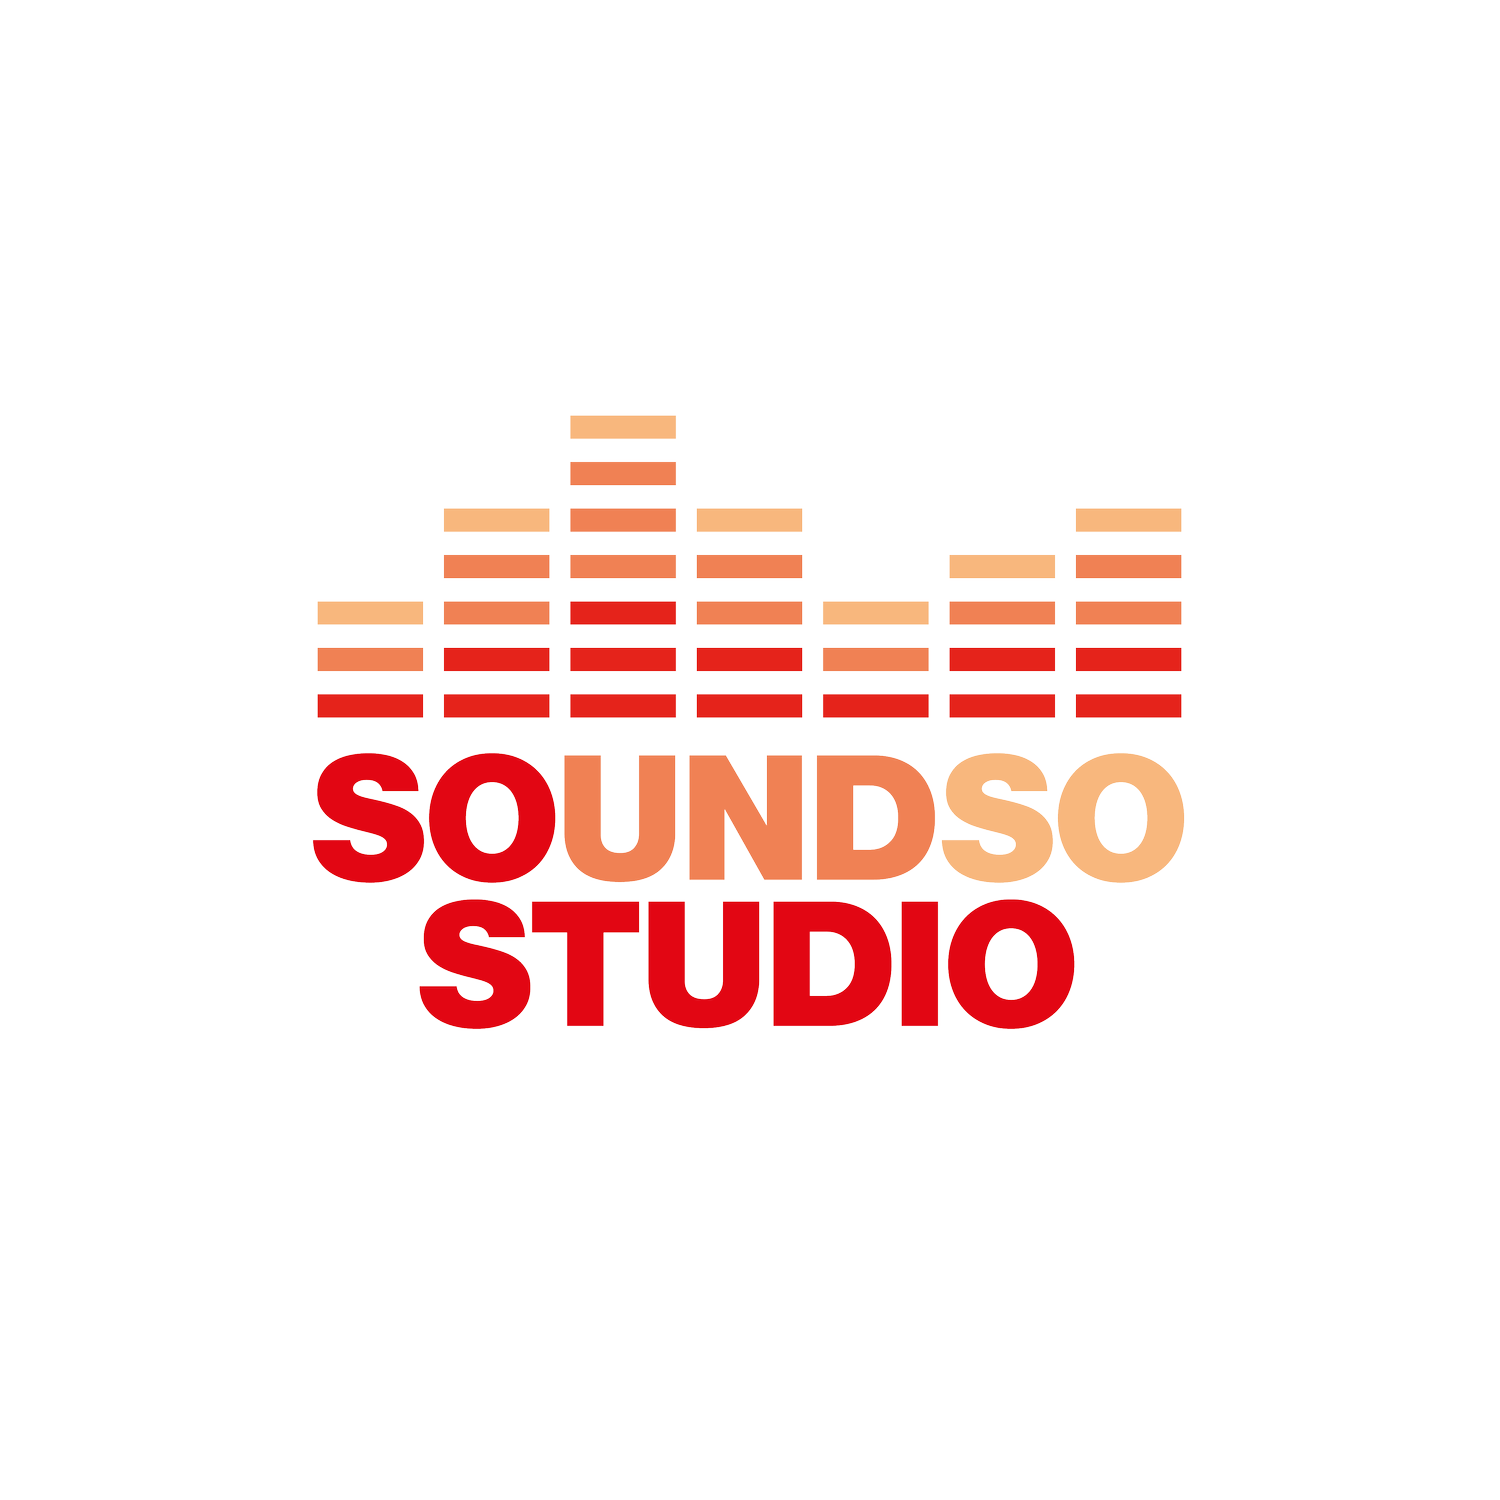 Soundso Studio